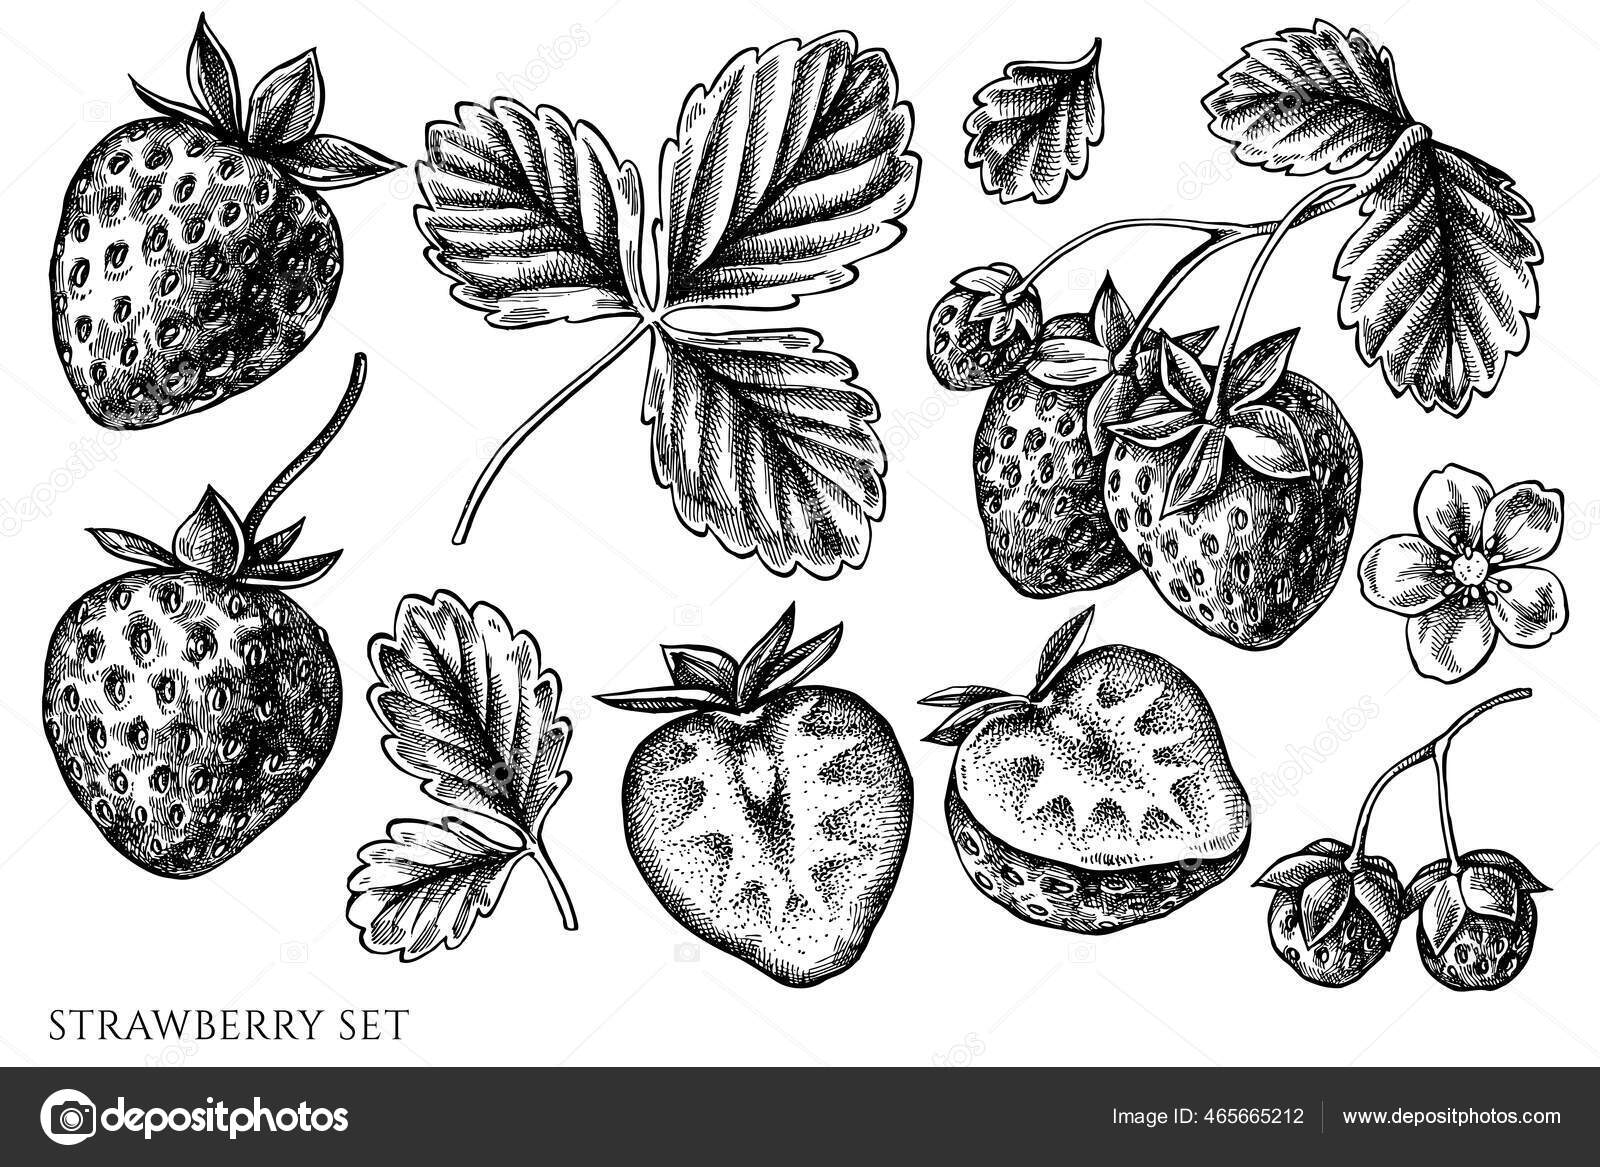 Vintage Strawberry Plant Drawing, Vintage Sketch of Strawberries